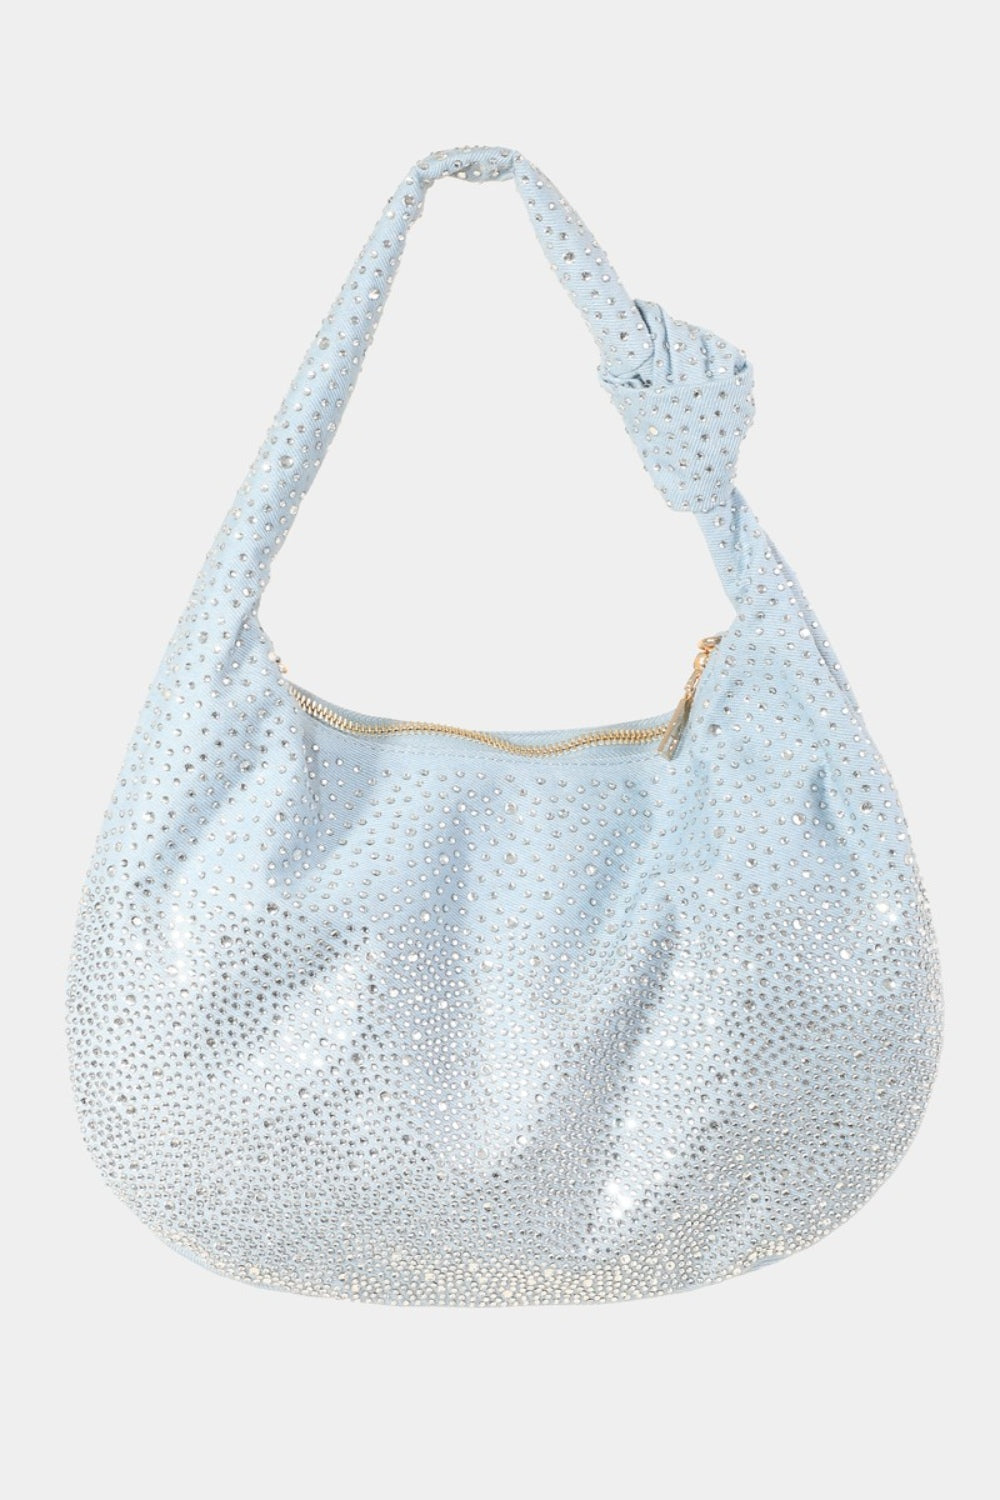 Fame Rhinestone Studded Handbag Light One Size 